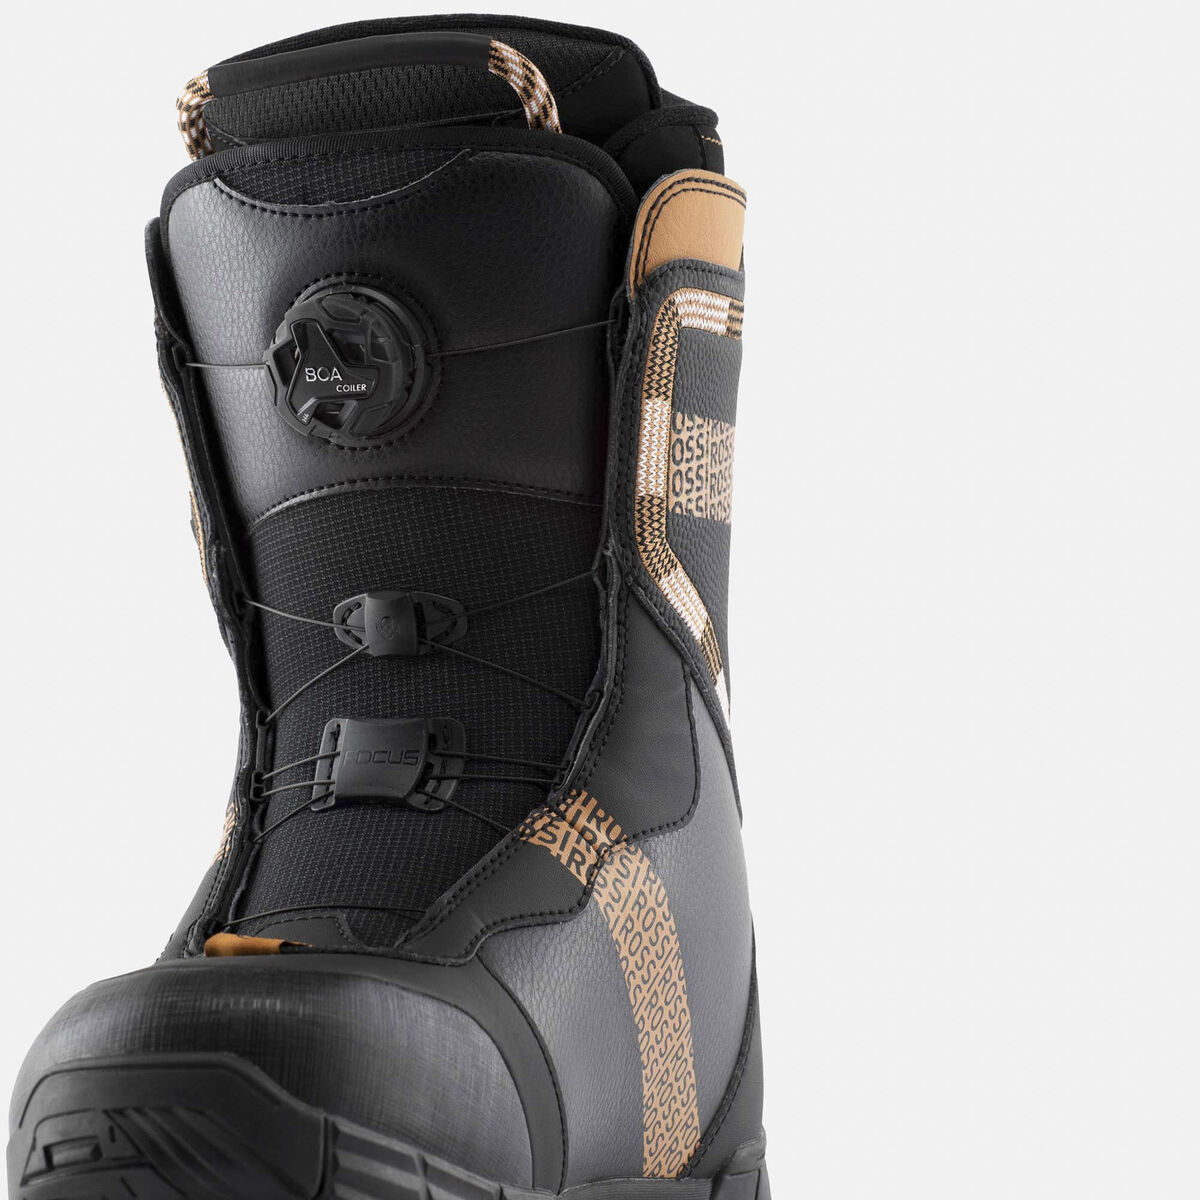 Men's Rossignol Primacy Boa® Focus snowboard boot